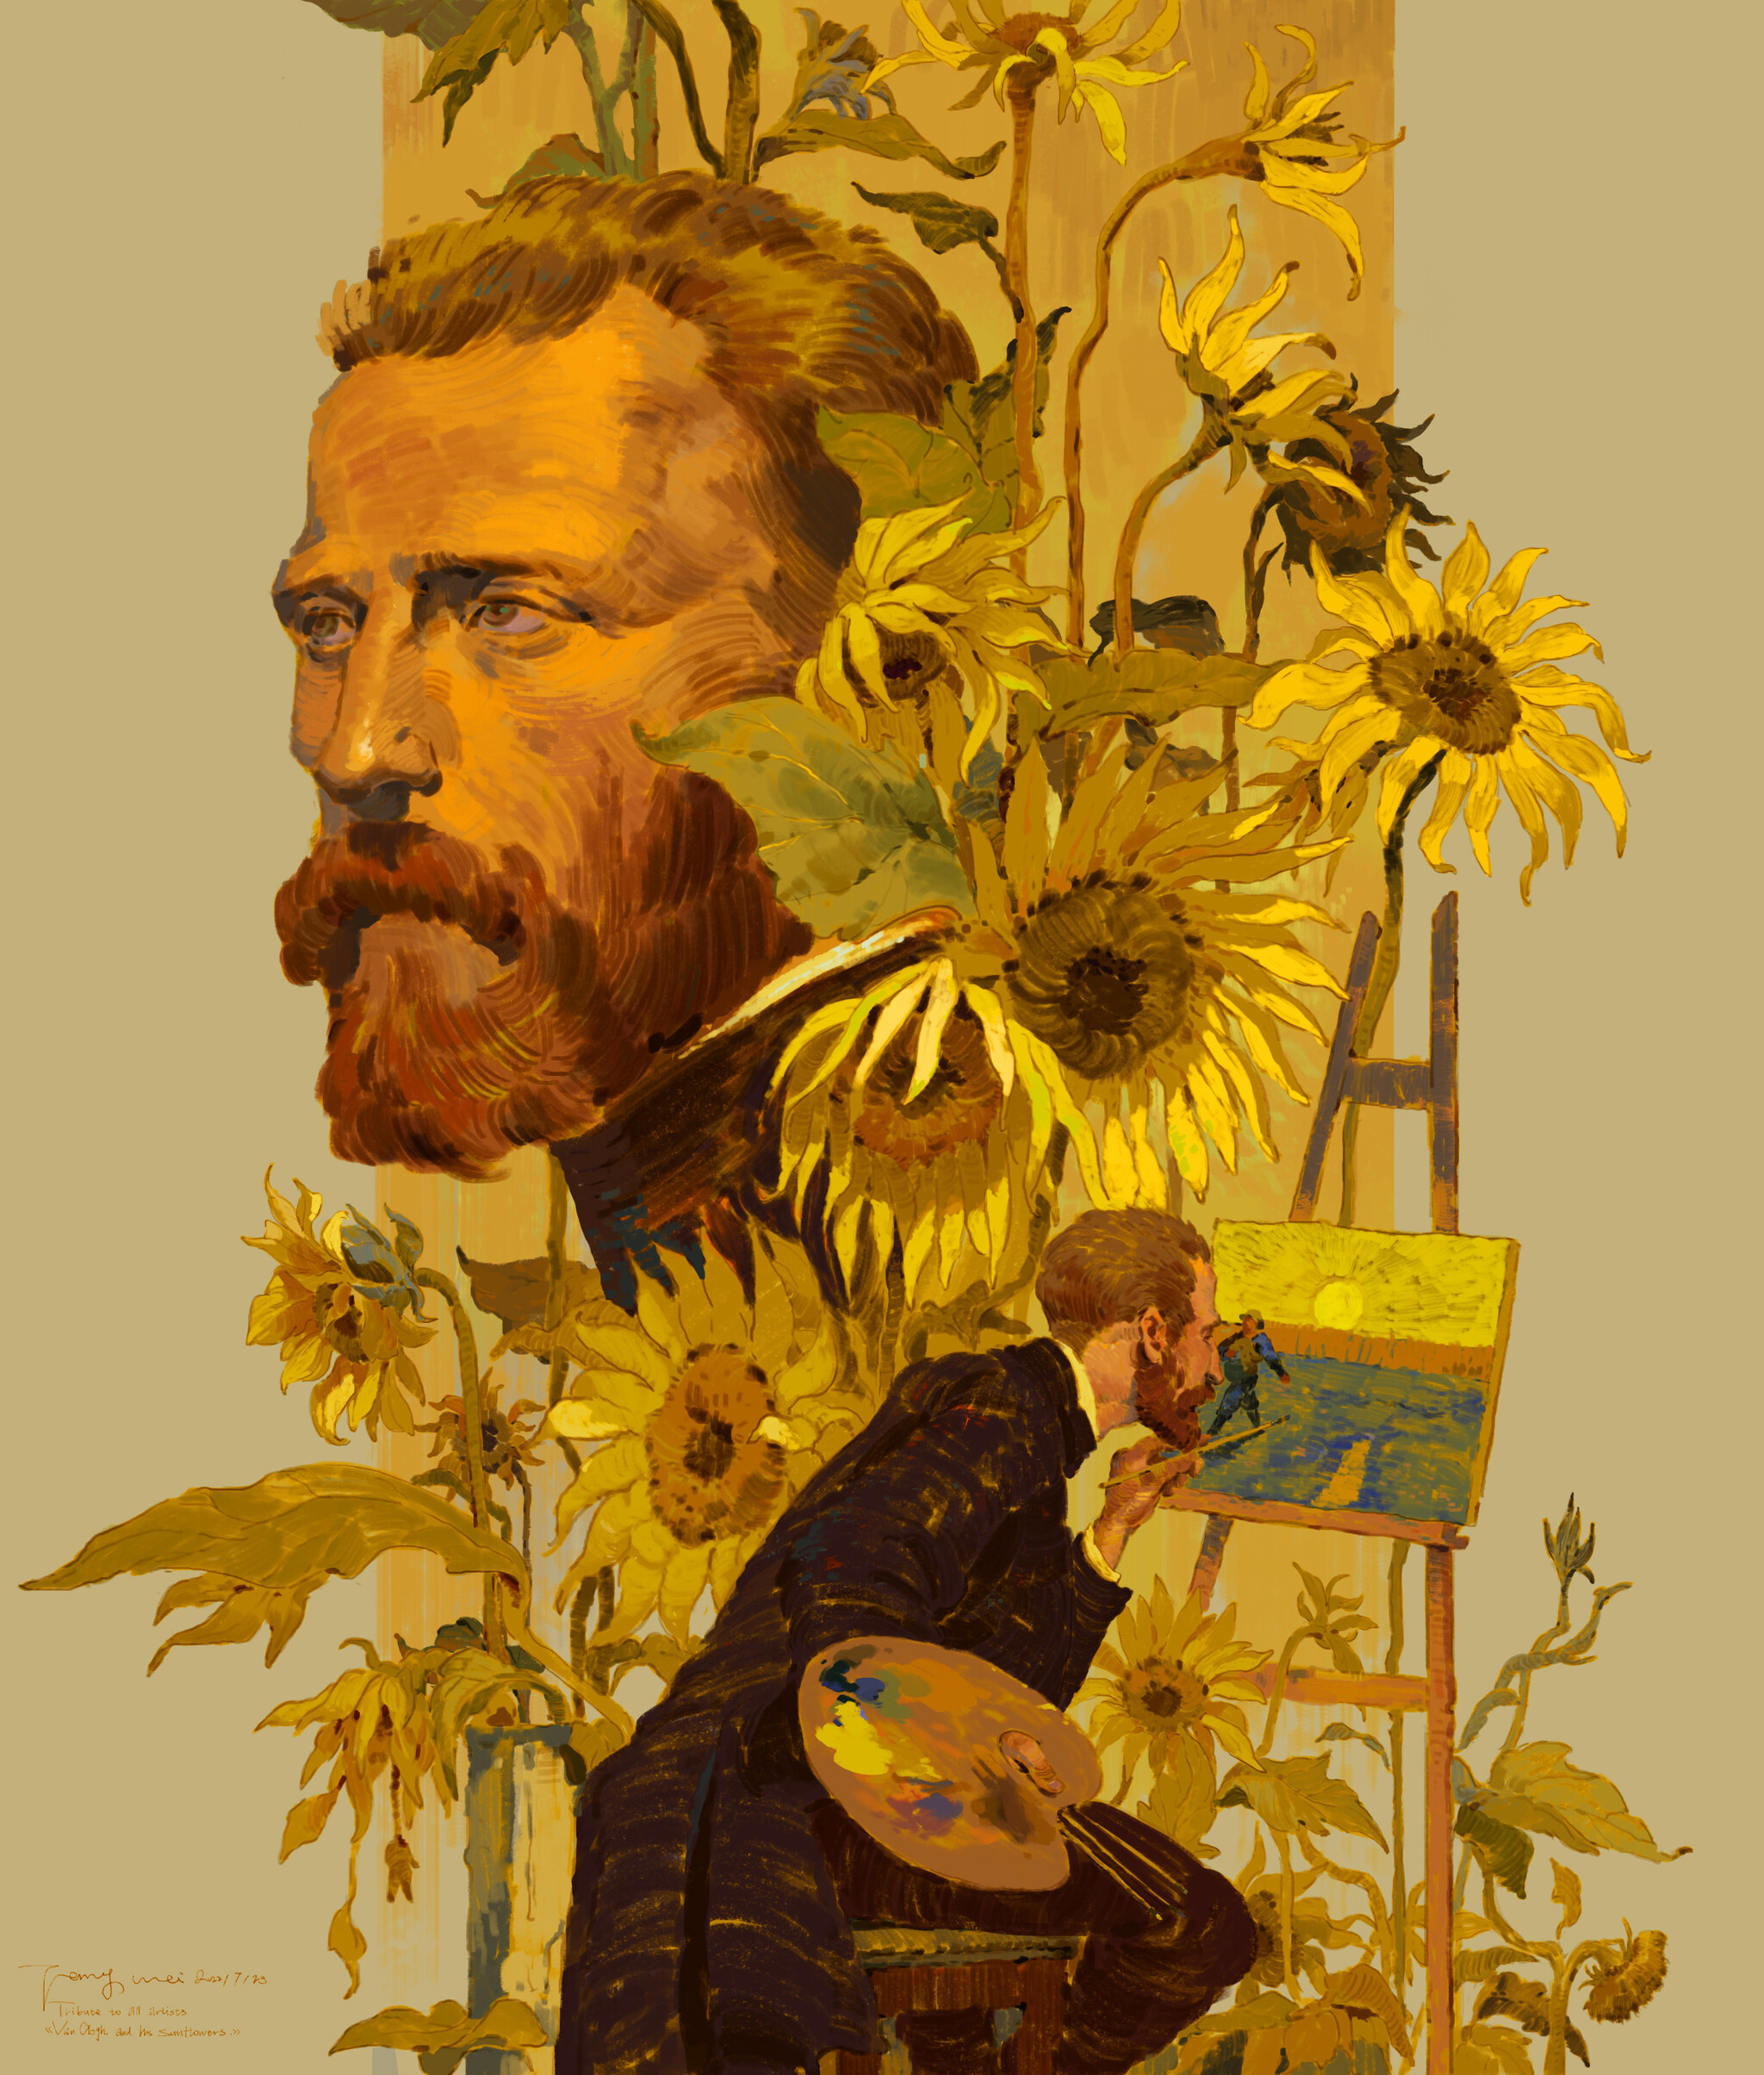 Van Gogh and his sunflowers - Art, Artstation, van Gogh